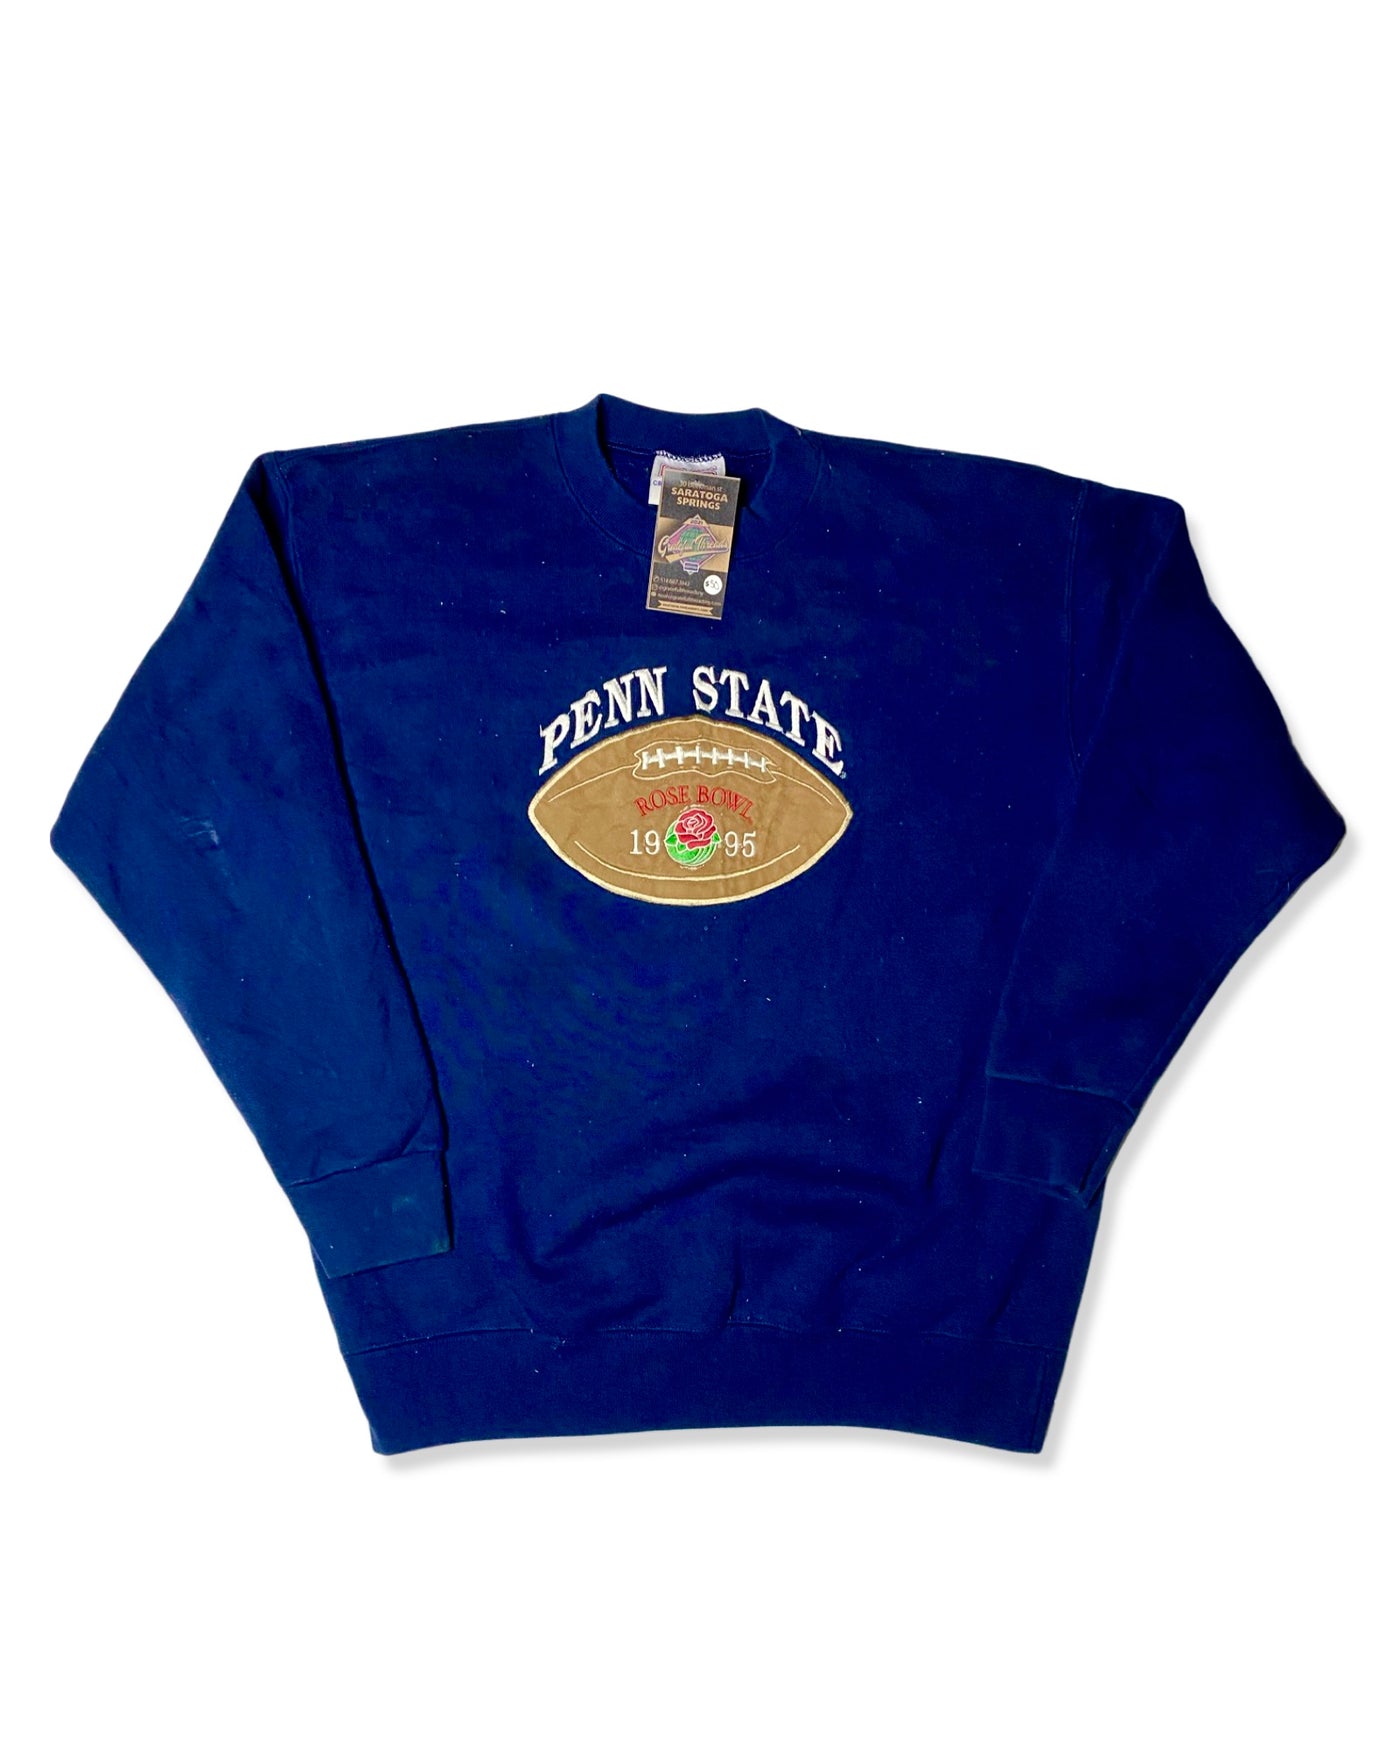 Vintage 1995 Penn State Rose Bowl Crewneck